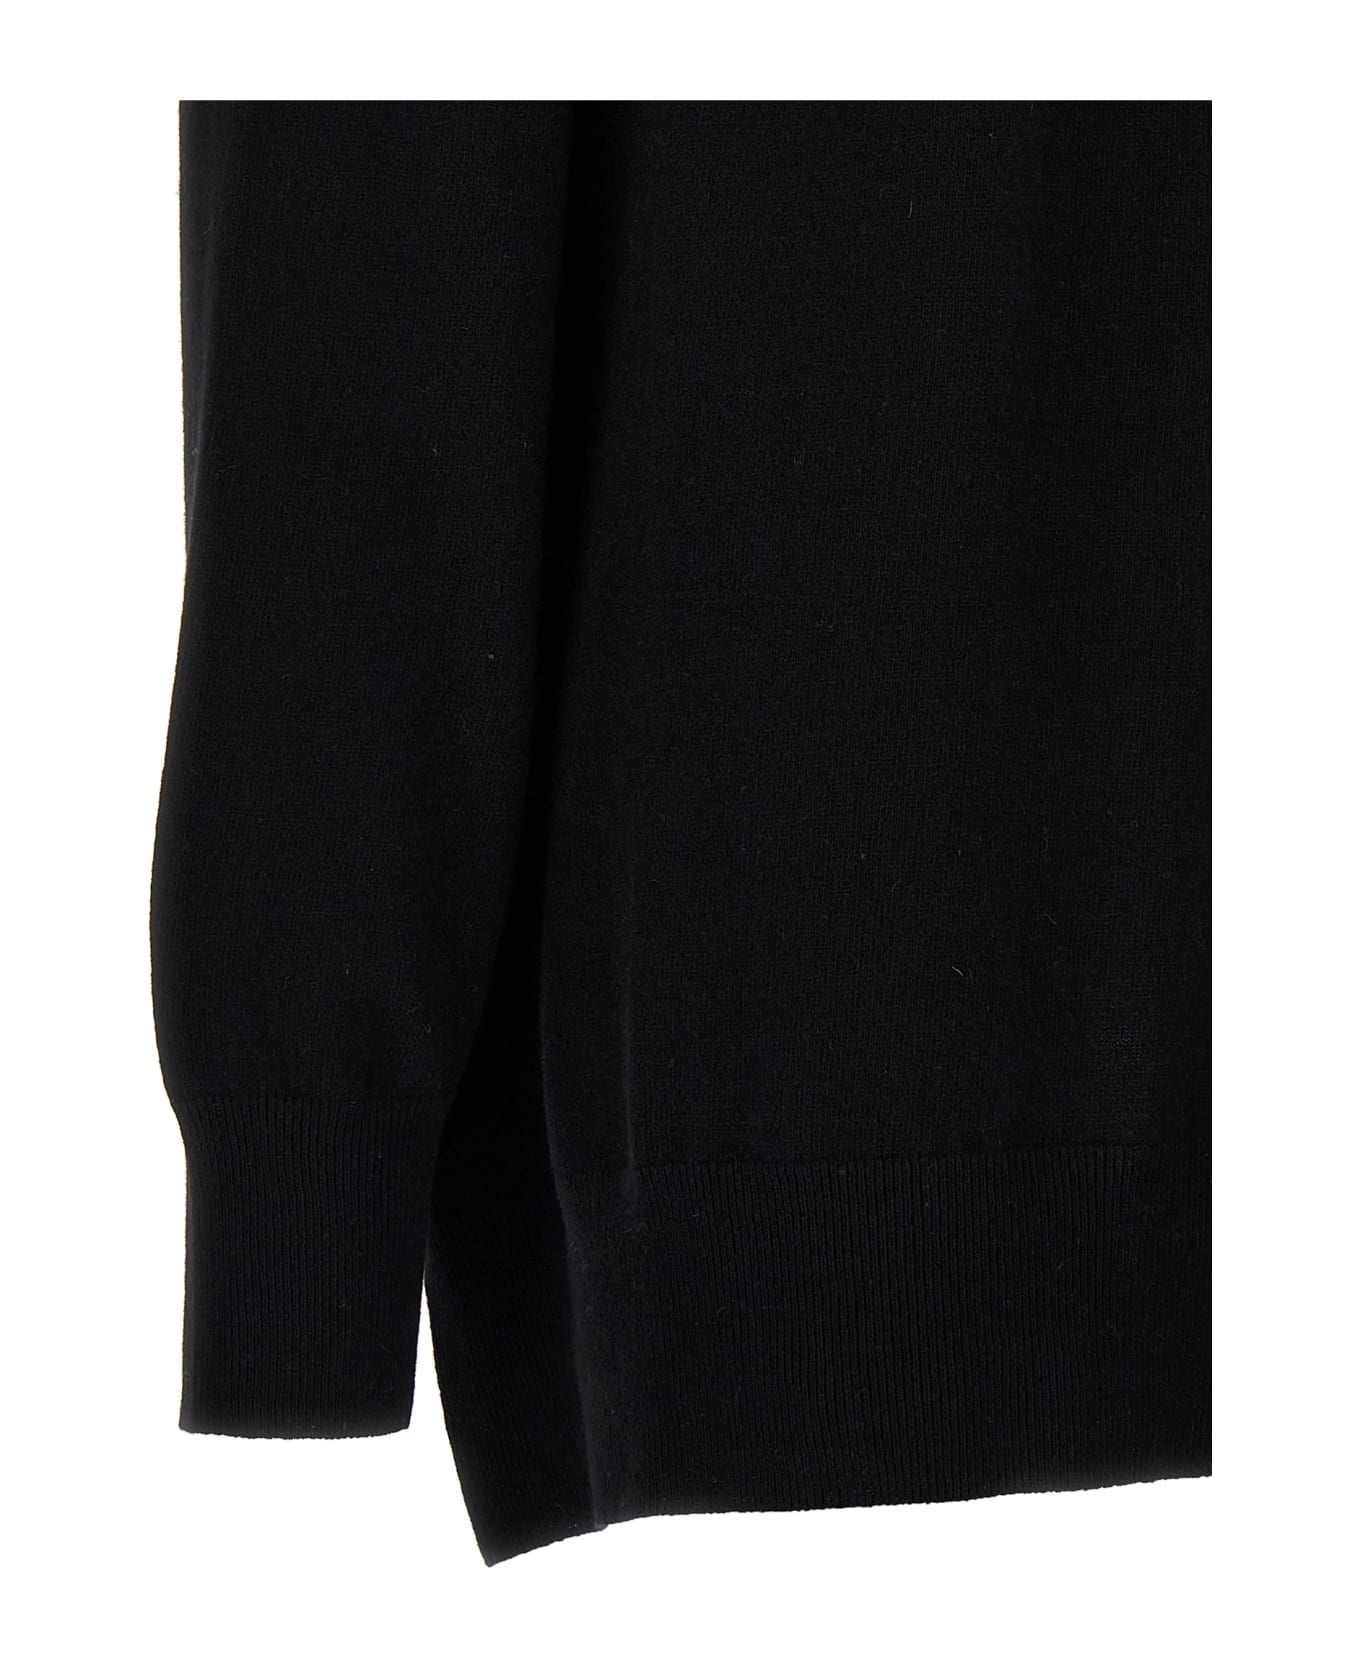 (nude) Oversize Sweater - Black   ニットウェア